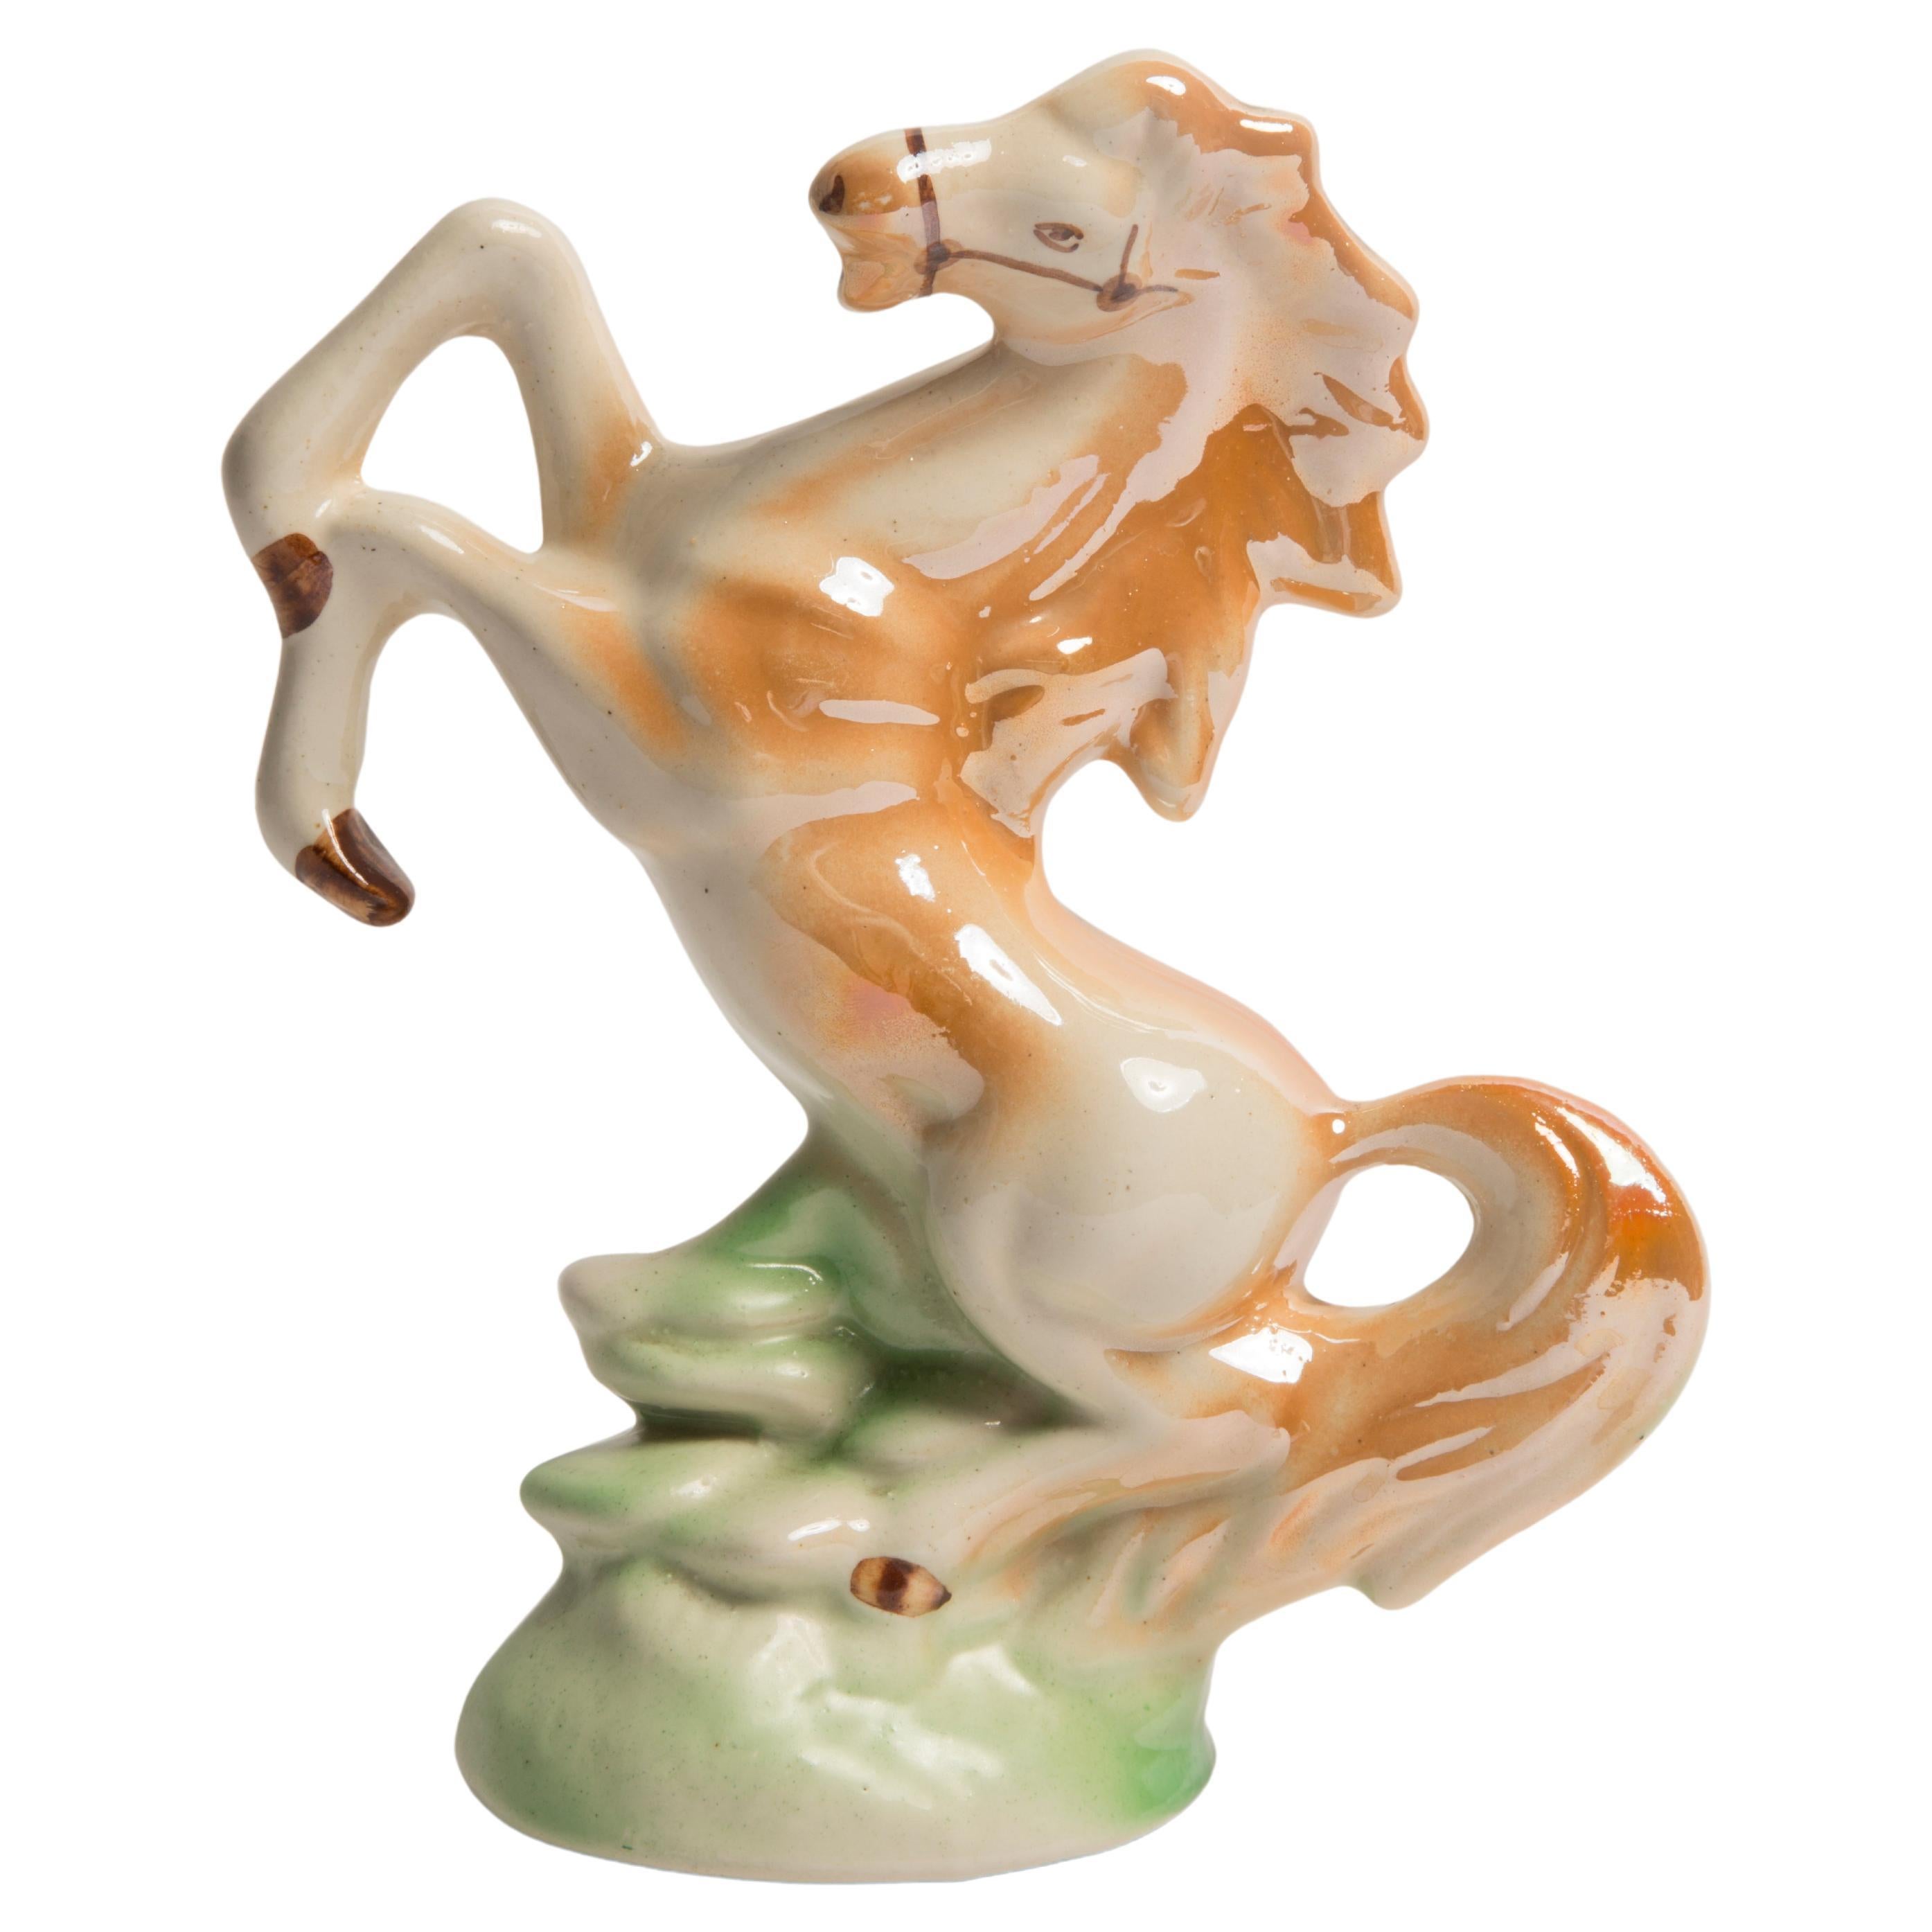 Midcentury Ceramic Porcelain Decorative Horse Sculpture, Europe, 1960s For Sale